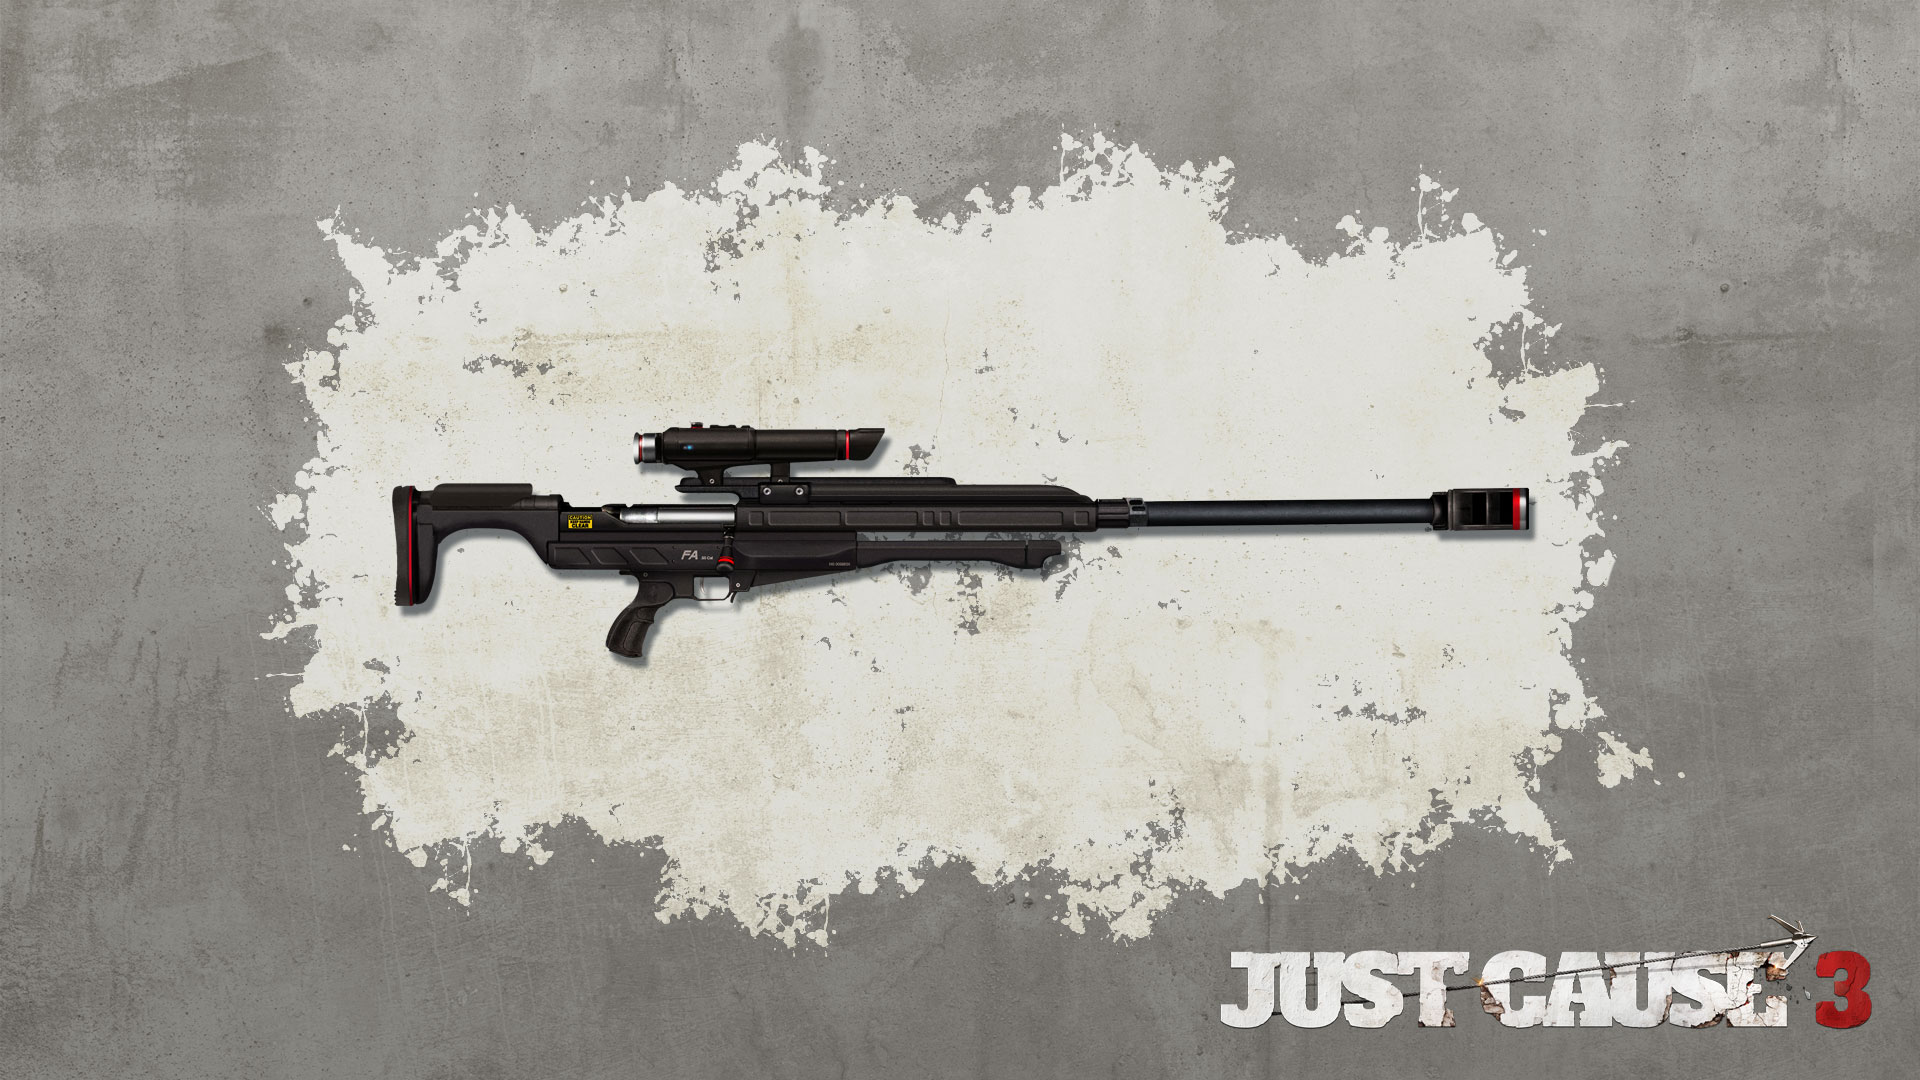 Just Cause 3 - Final Argument Sniper Rifle DLC Steam CD Key 1.67 usd